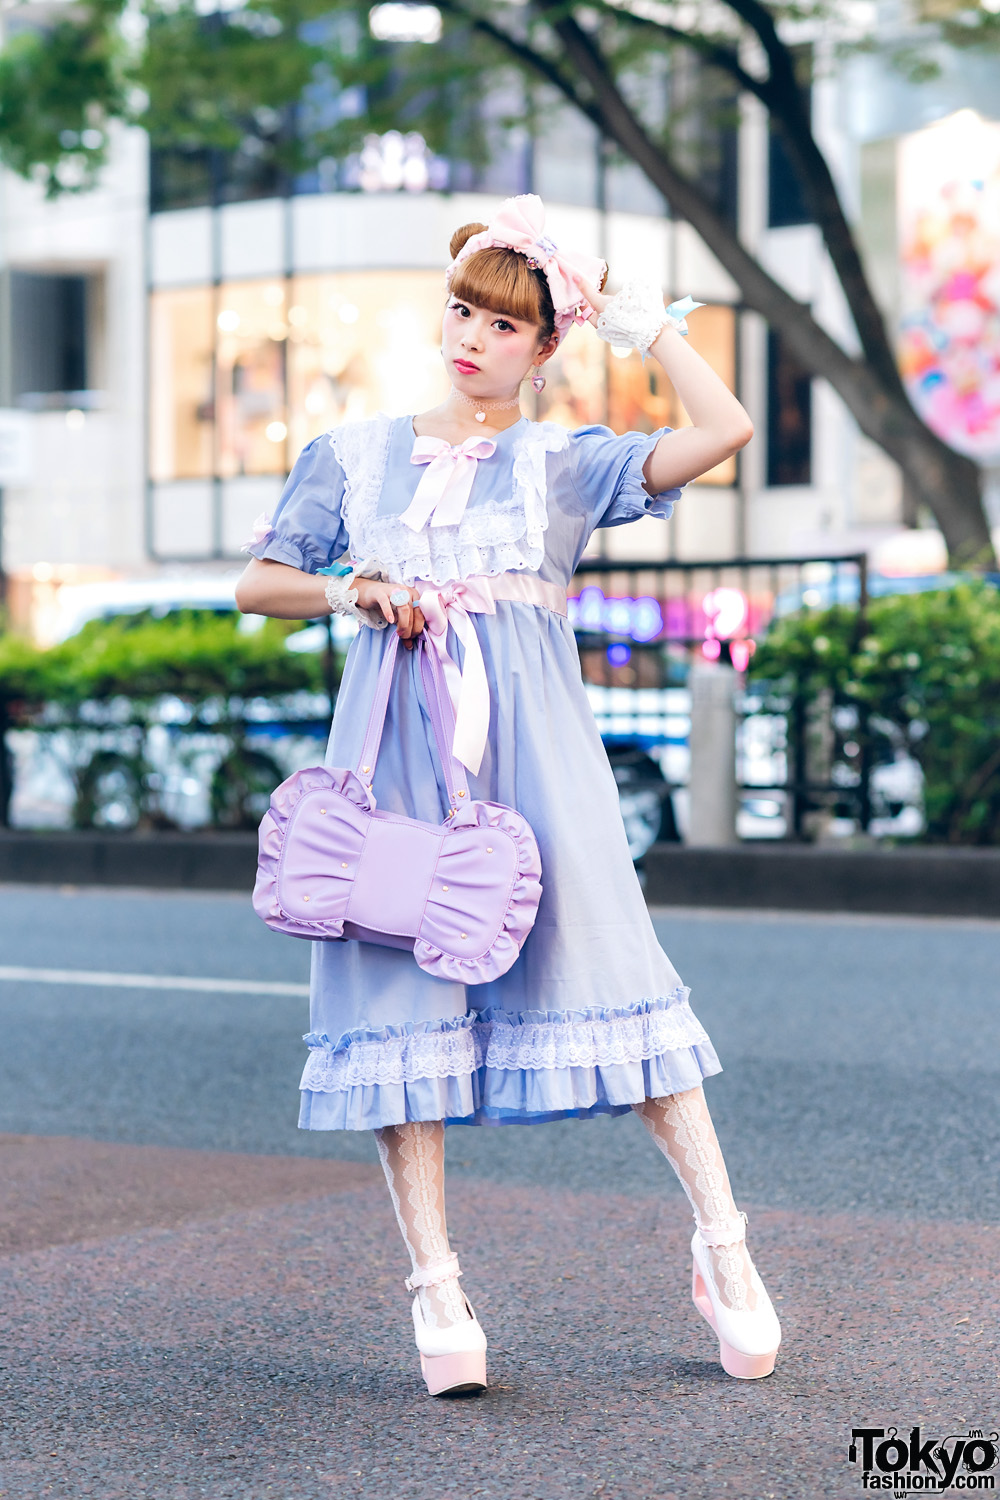 Kawaii Pastel Fashion in Harajuku w/ Twin Buns Hairstyle, Nile Perch Dress, Angelic Pretty Bow Bag & WEGO Platforms